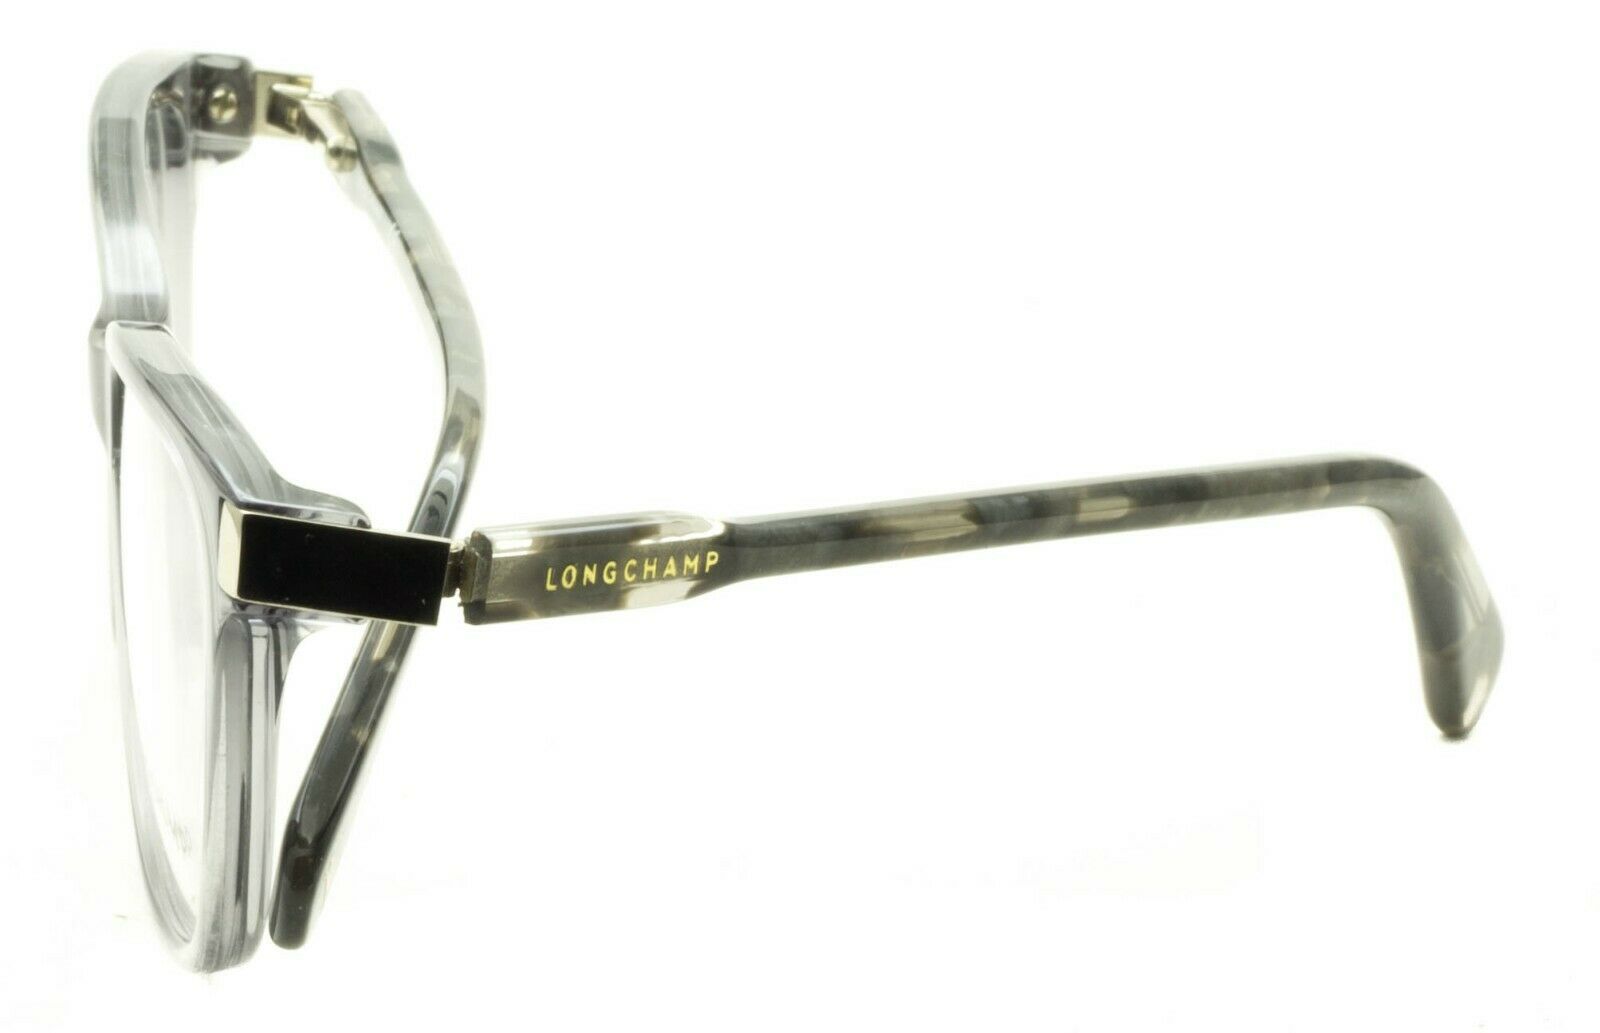 LONGCHAMP LO2616 035 53mm Eyewear FRAMES Glasses RX Optical Eyeglasses - New